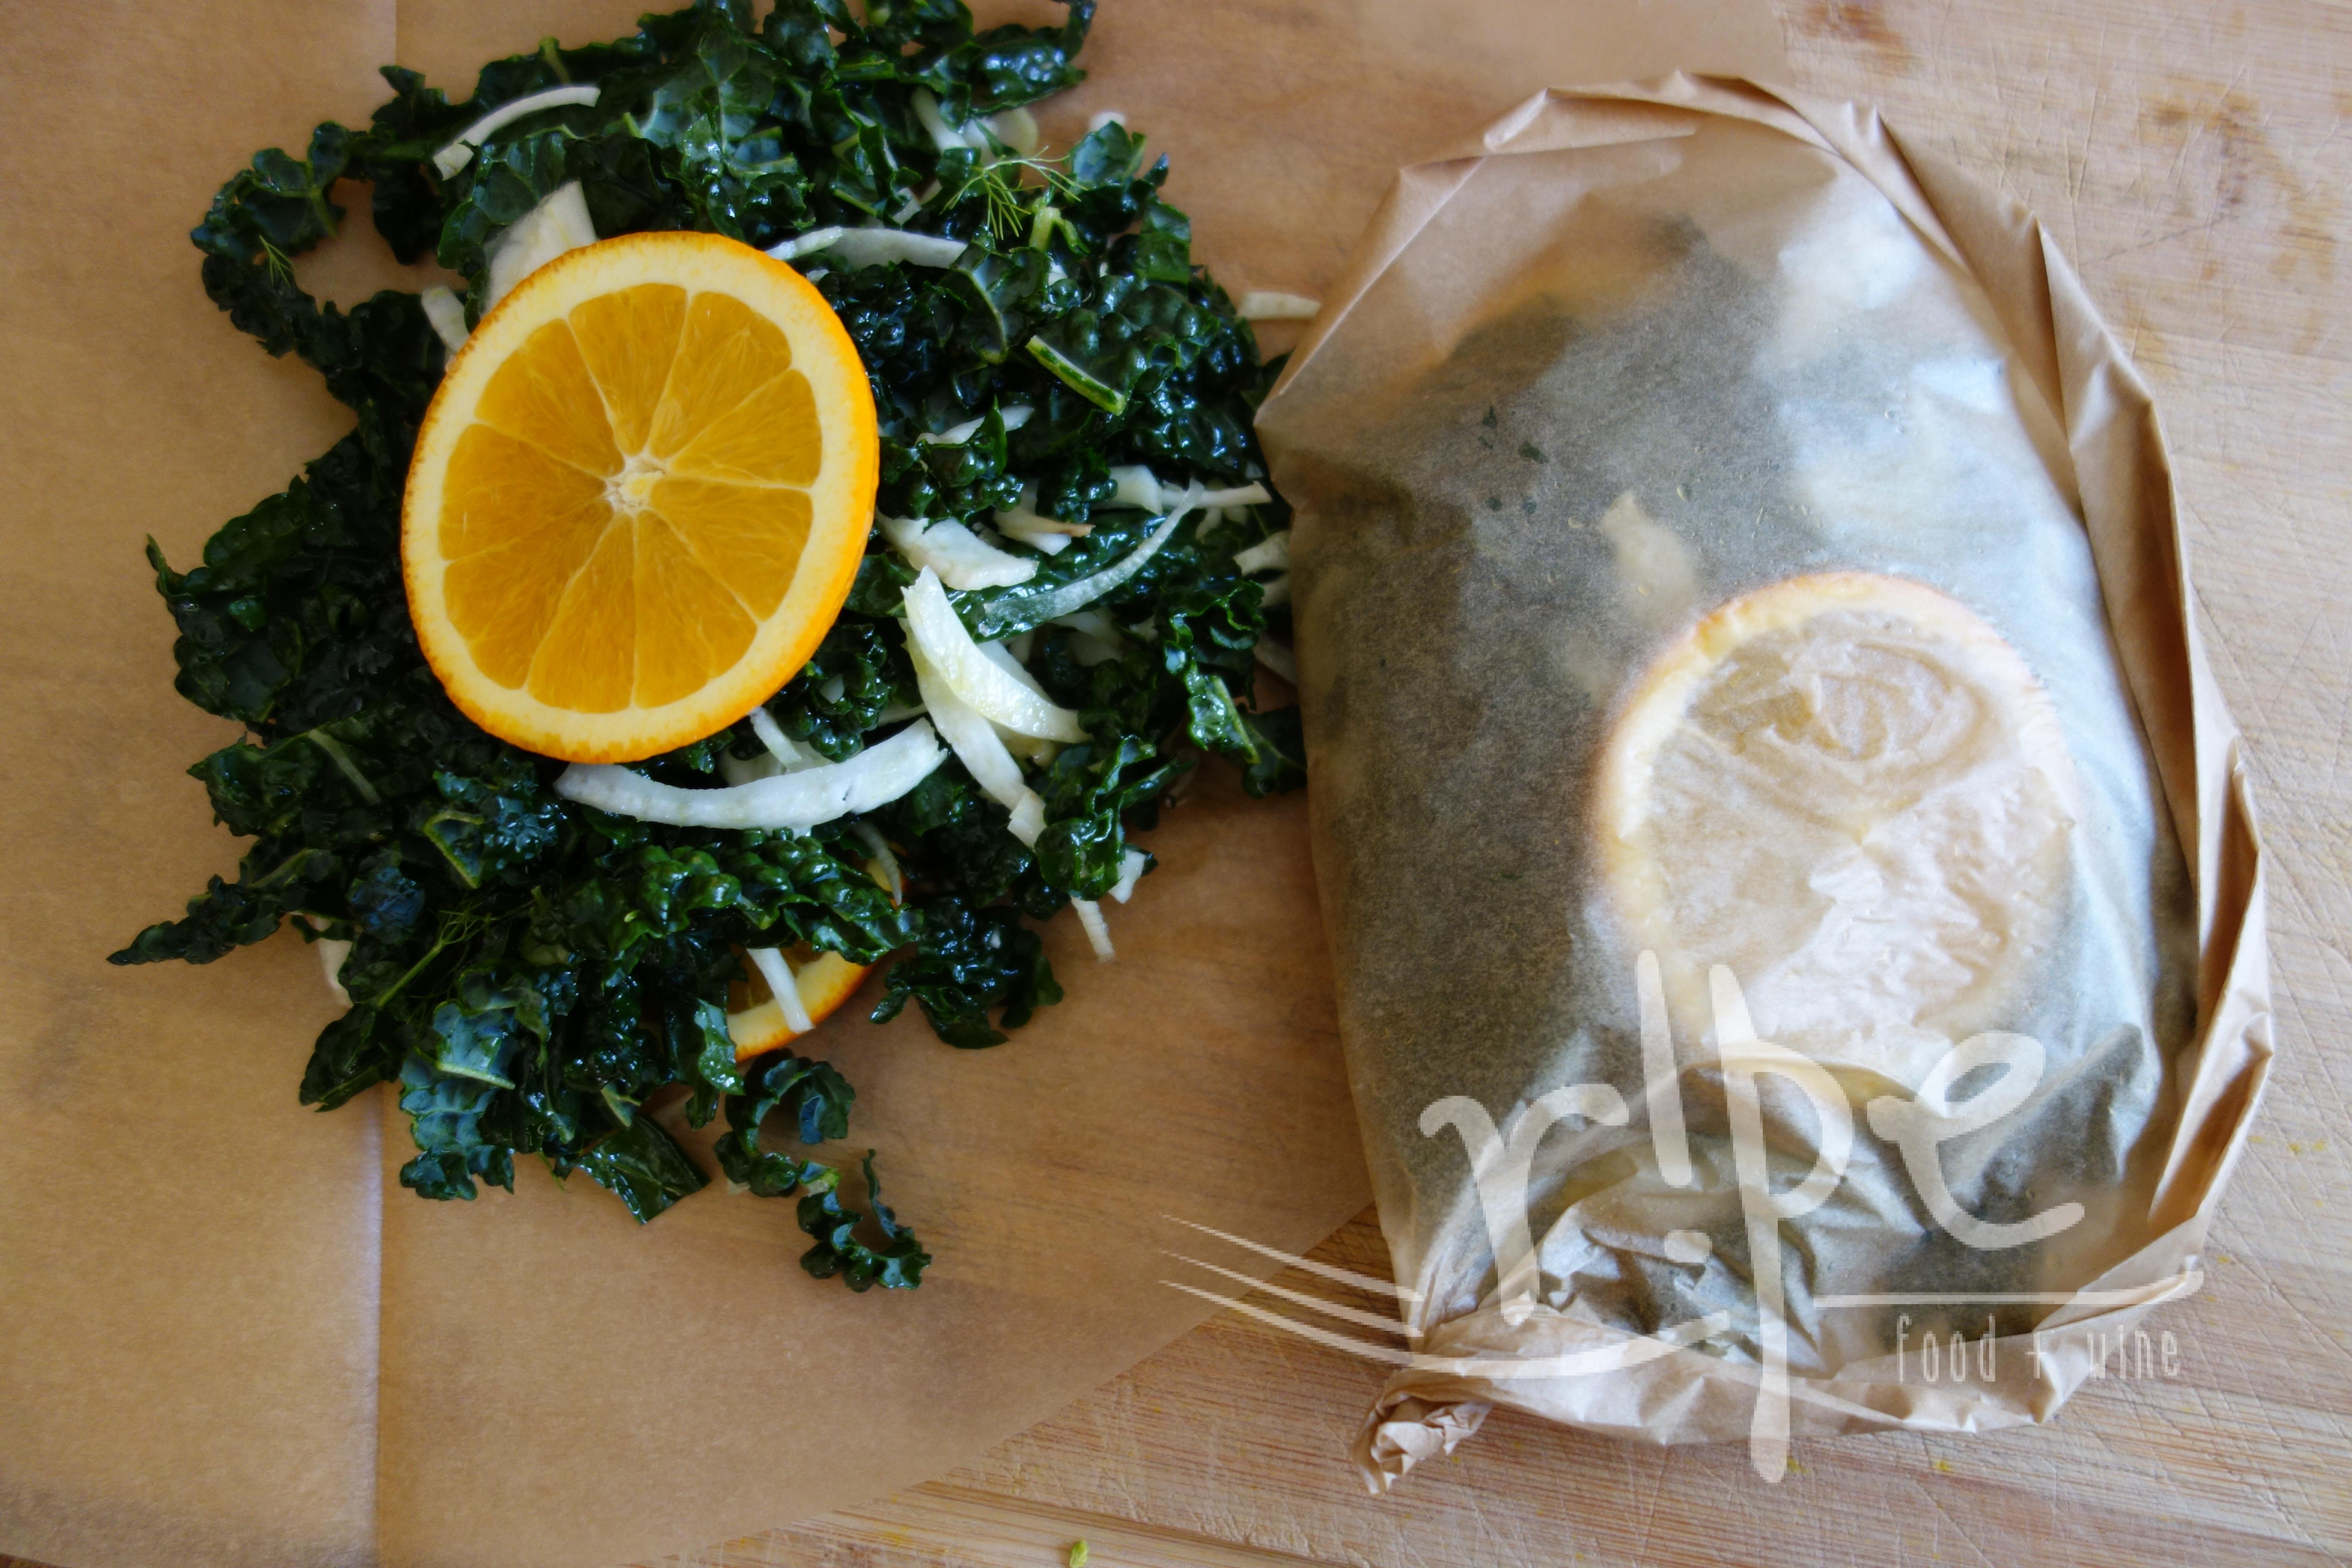 Parchment Baked Cod with Fennel, Kale & Orange